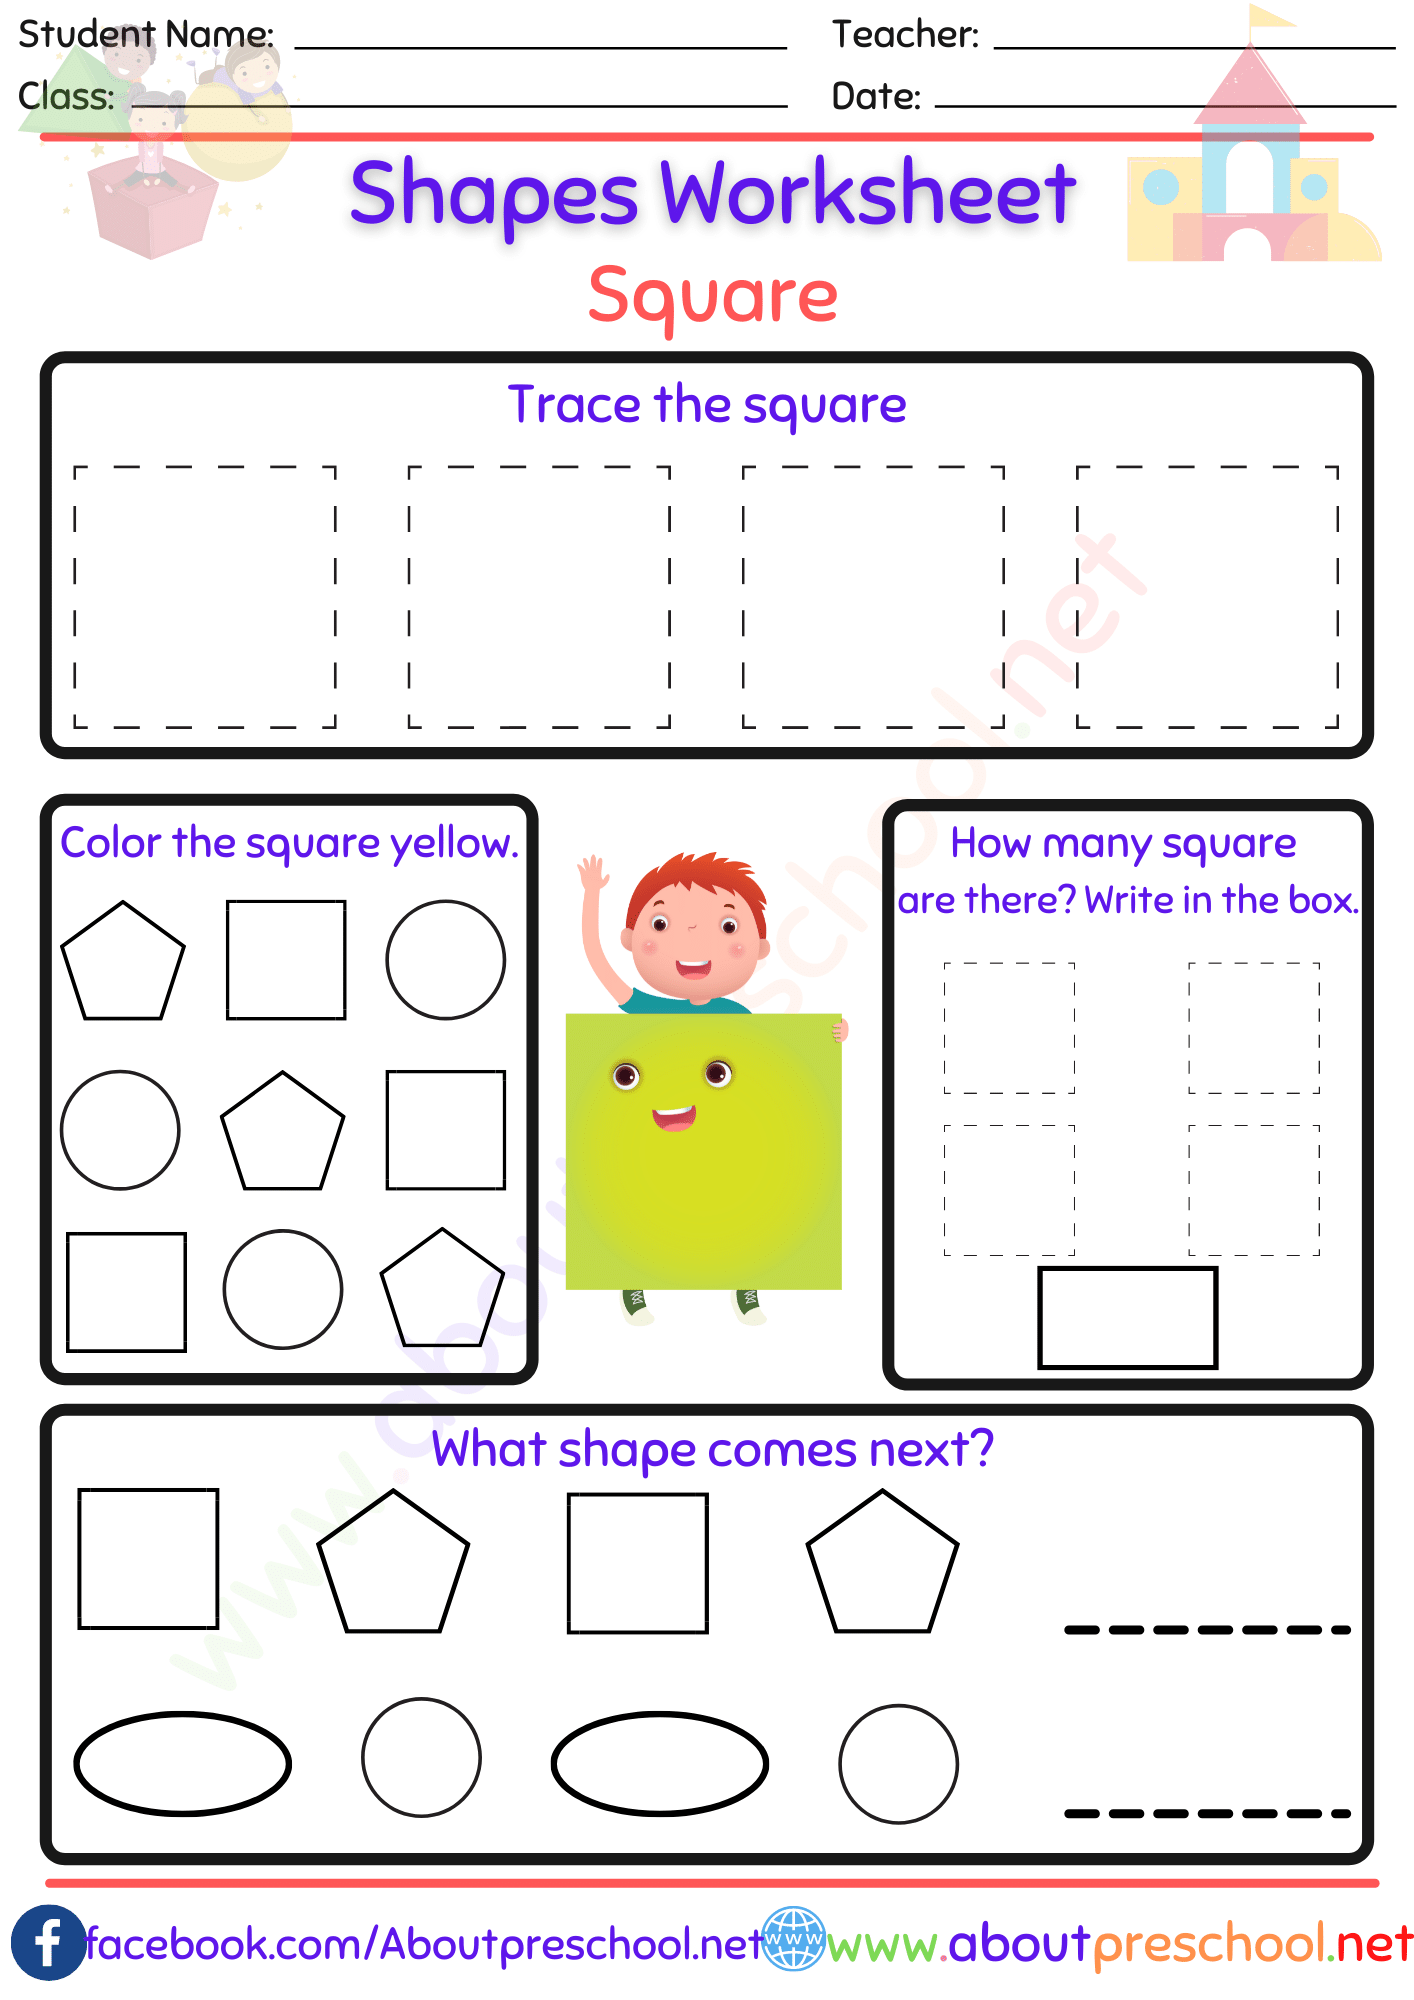 Shapes Worksheets – Square